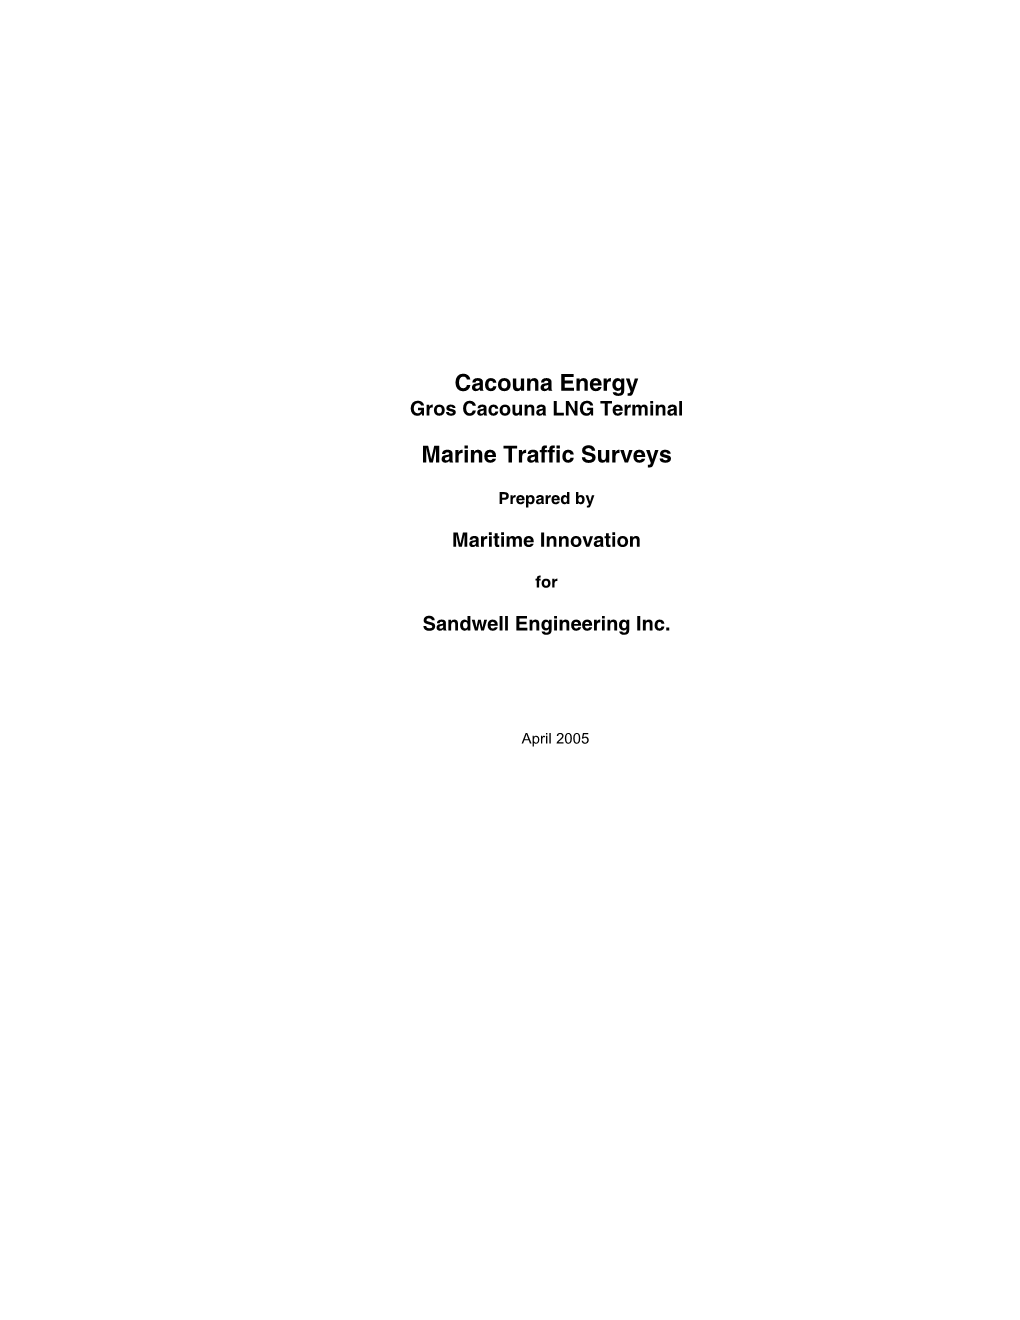 DA9 Marine Traffic Study Report